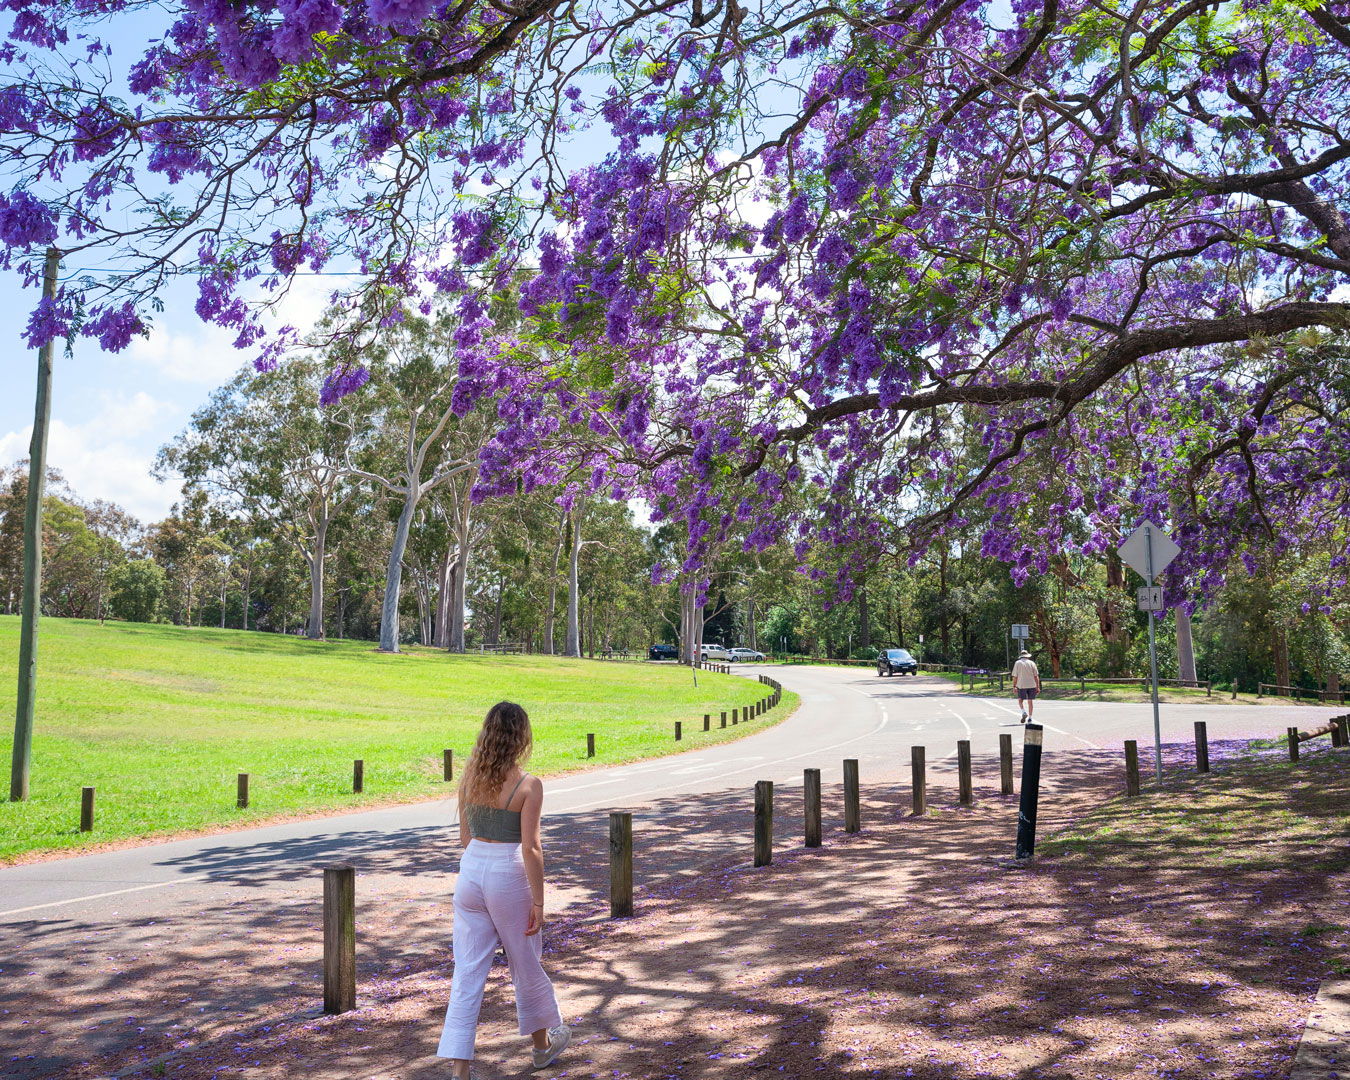 Parramatta Park jacaranda tree